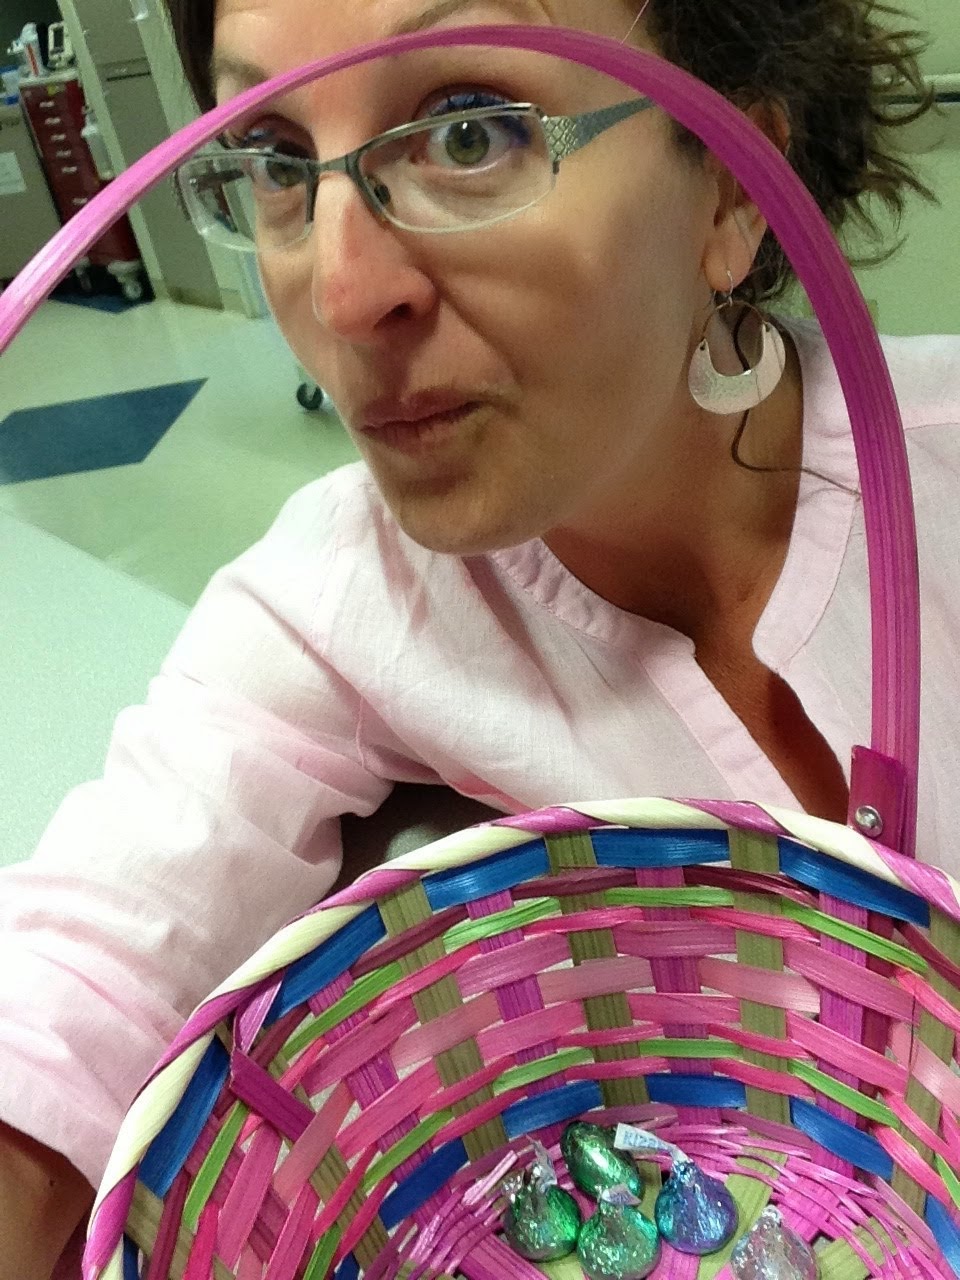 My sister, JJ, found the once full Easter basket we left at the Nurse's station.